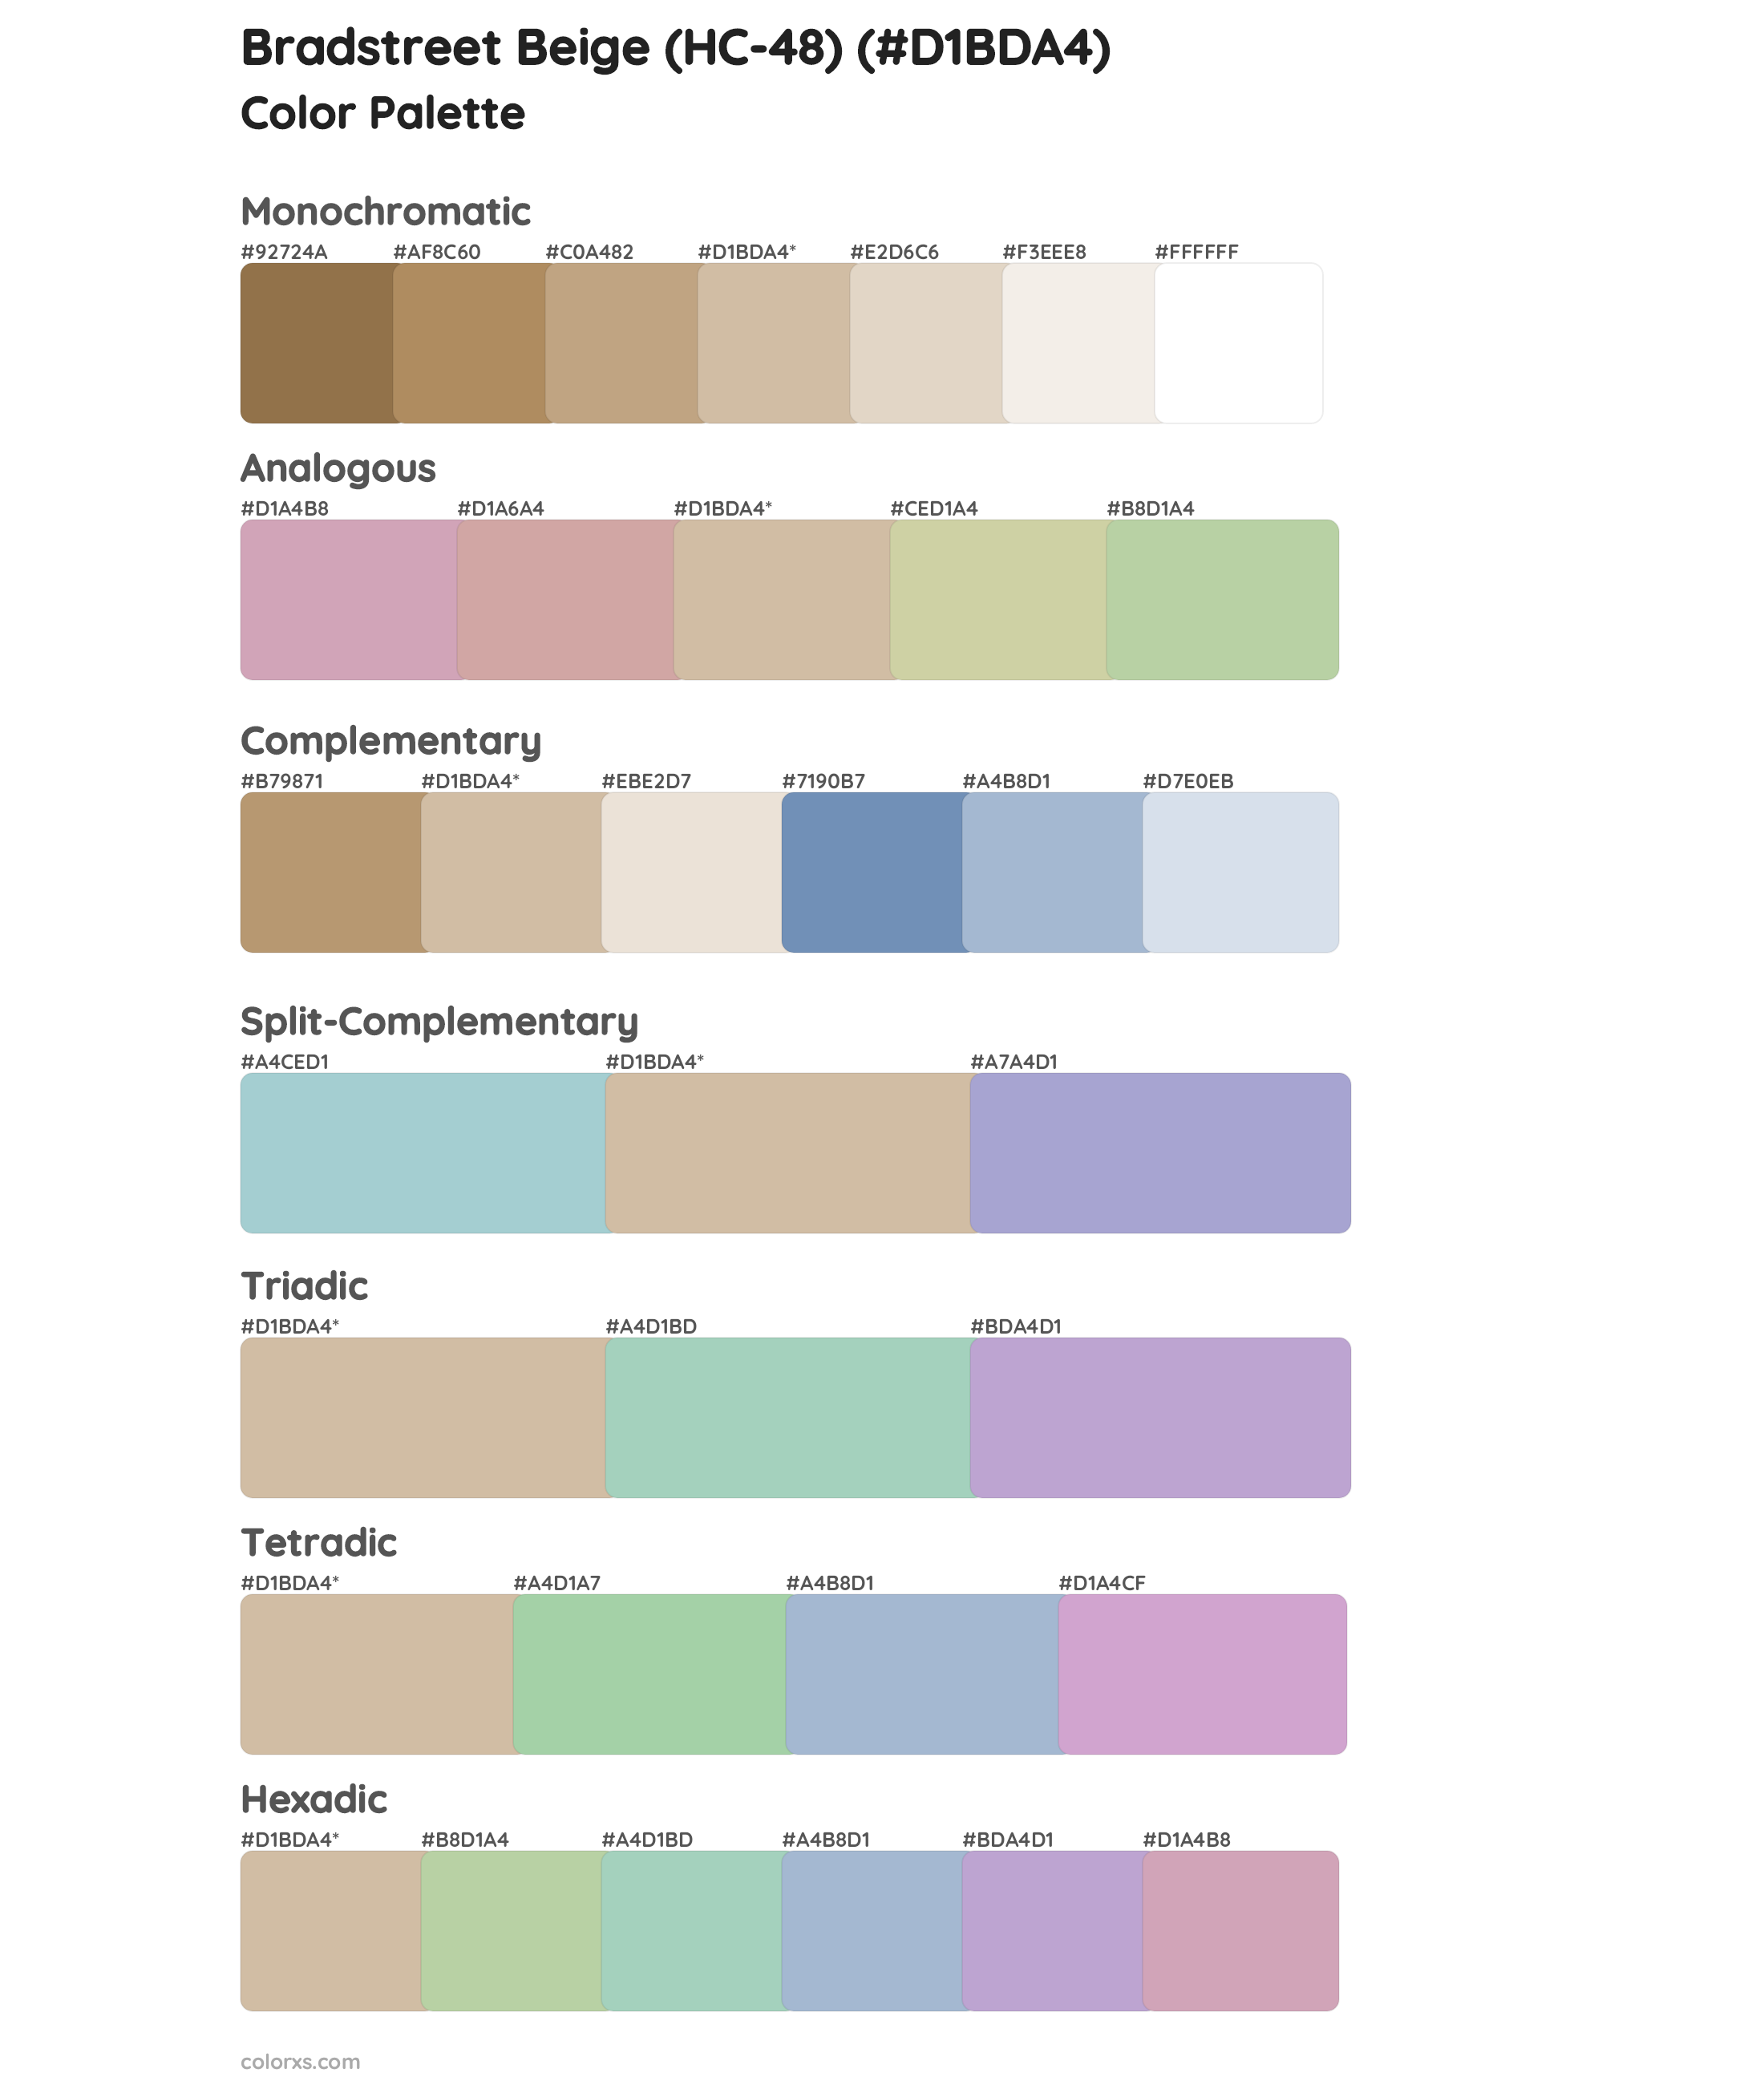 Bradstreet Beige (HC-48) Color Scheme Palettes